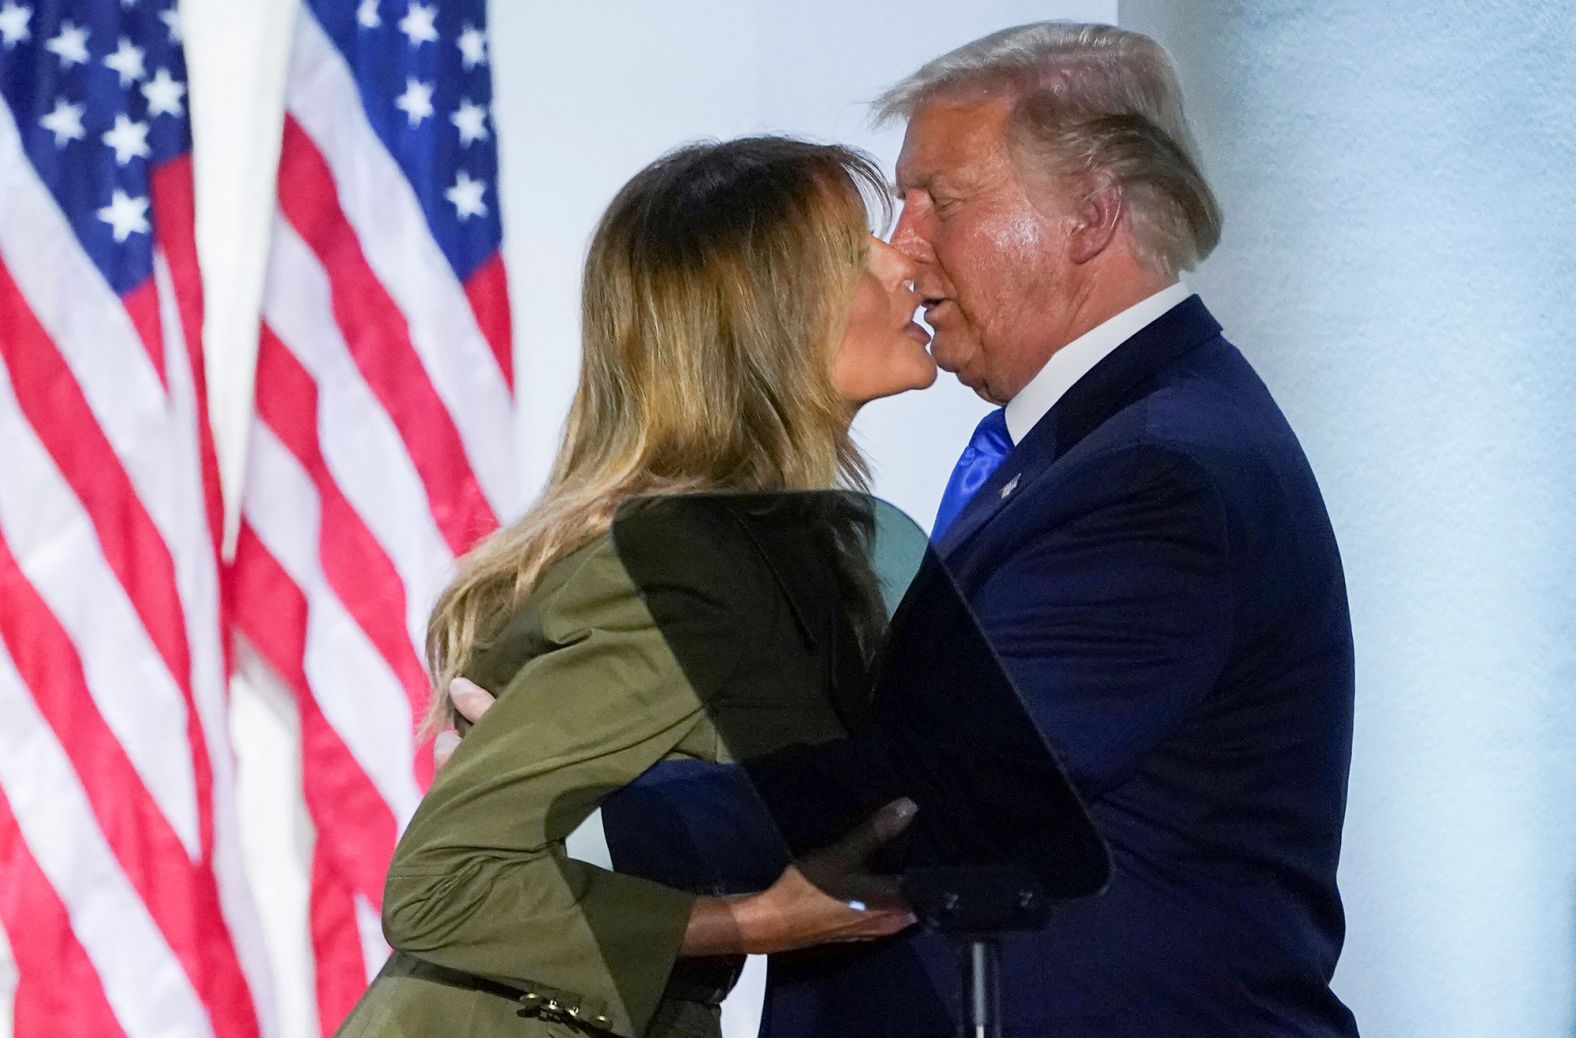 The Trumps kiss after Melania's speech.